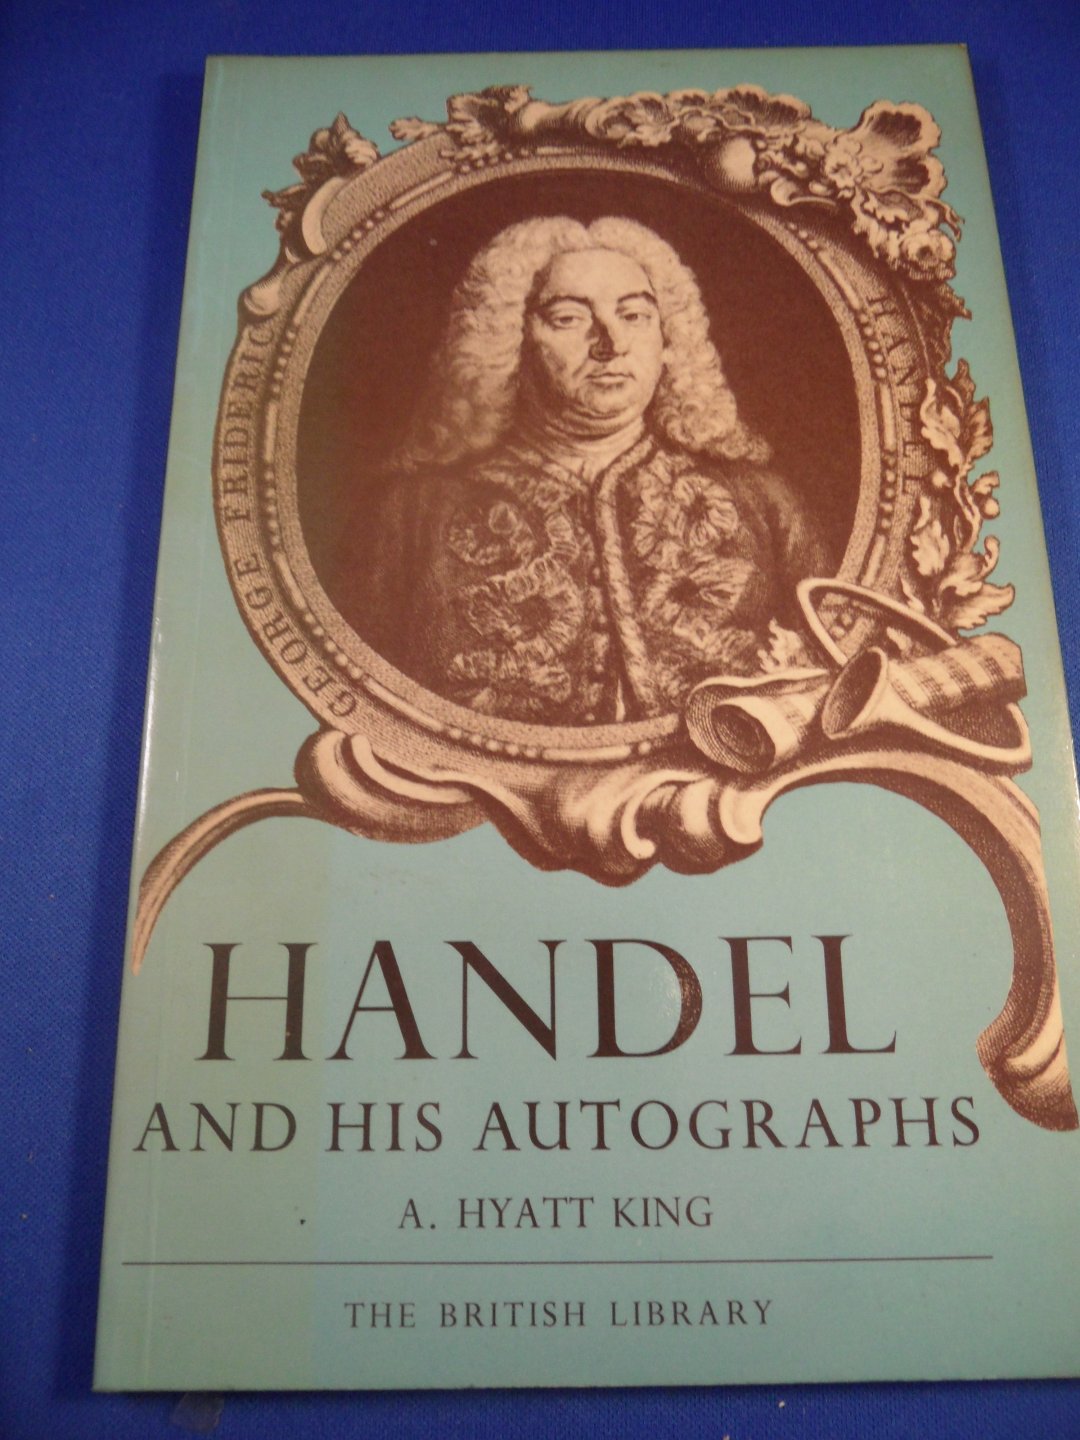 King, A. Hyatt - Handel and his autographs